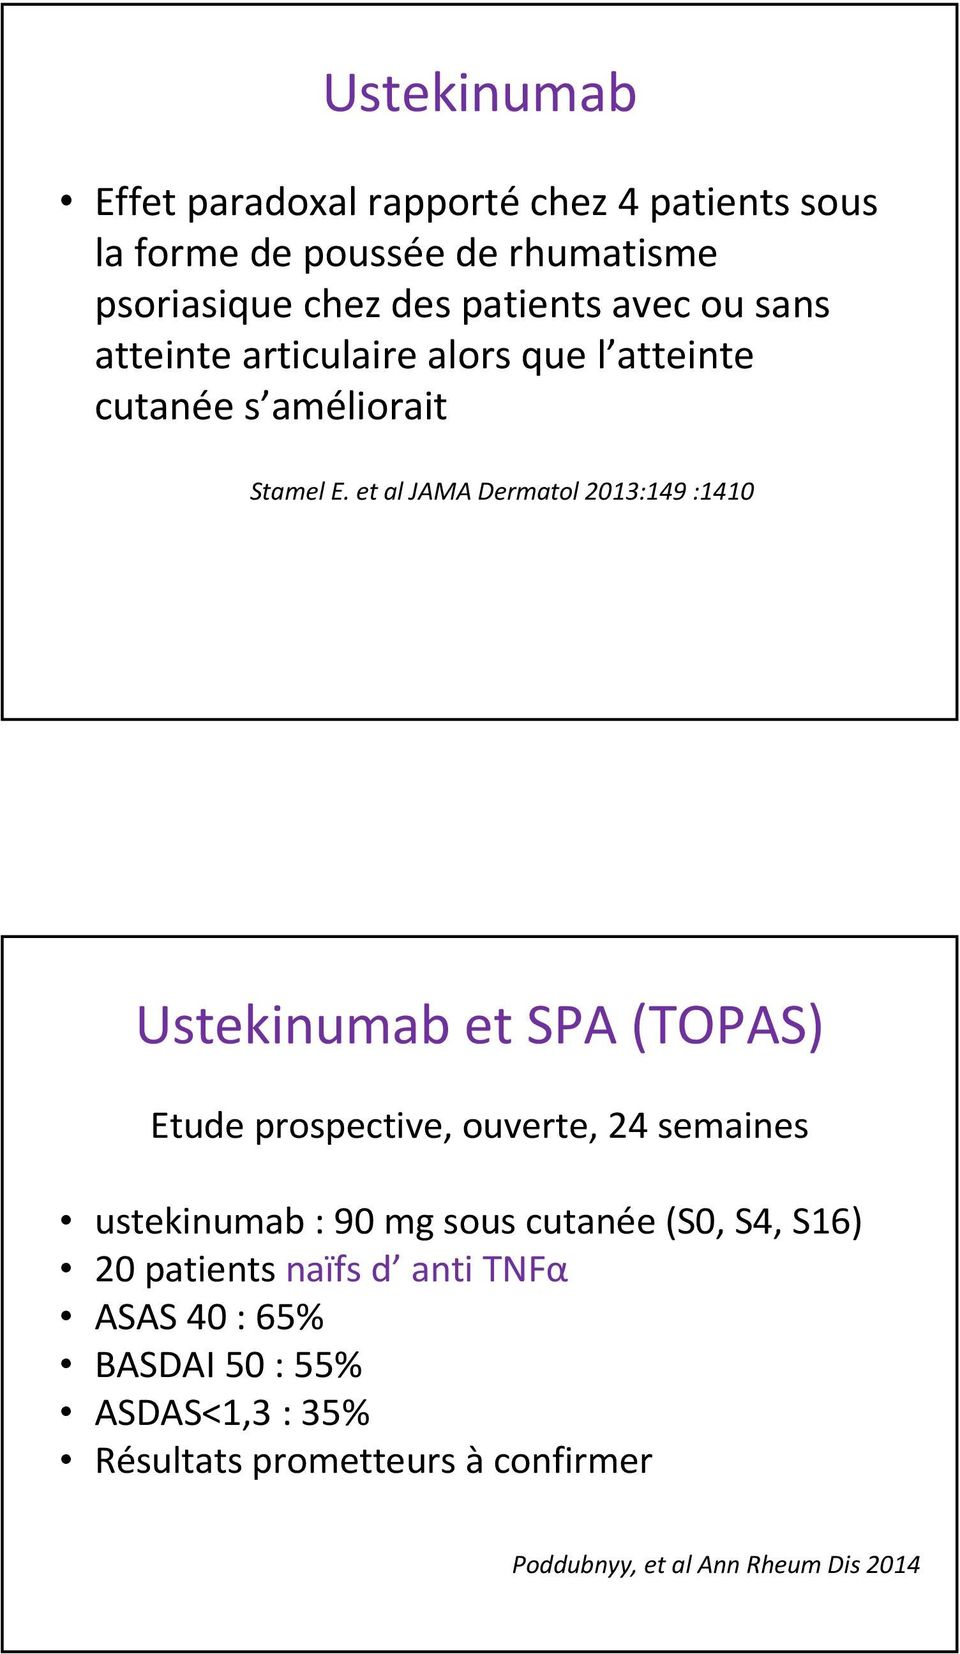 et al JAMA Dermatol 2013:149 :1410 Ustekinumab et SPA (TOPAS) Etude prospective, ouverte, 24 semaines ustekinumab : 90 mg